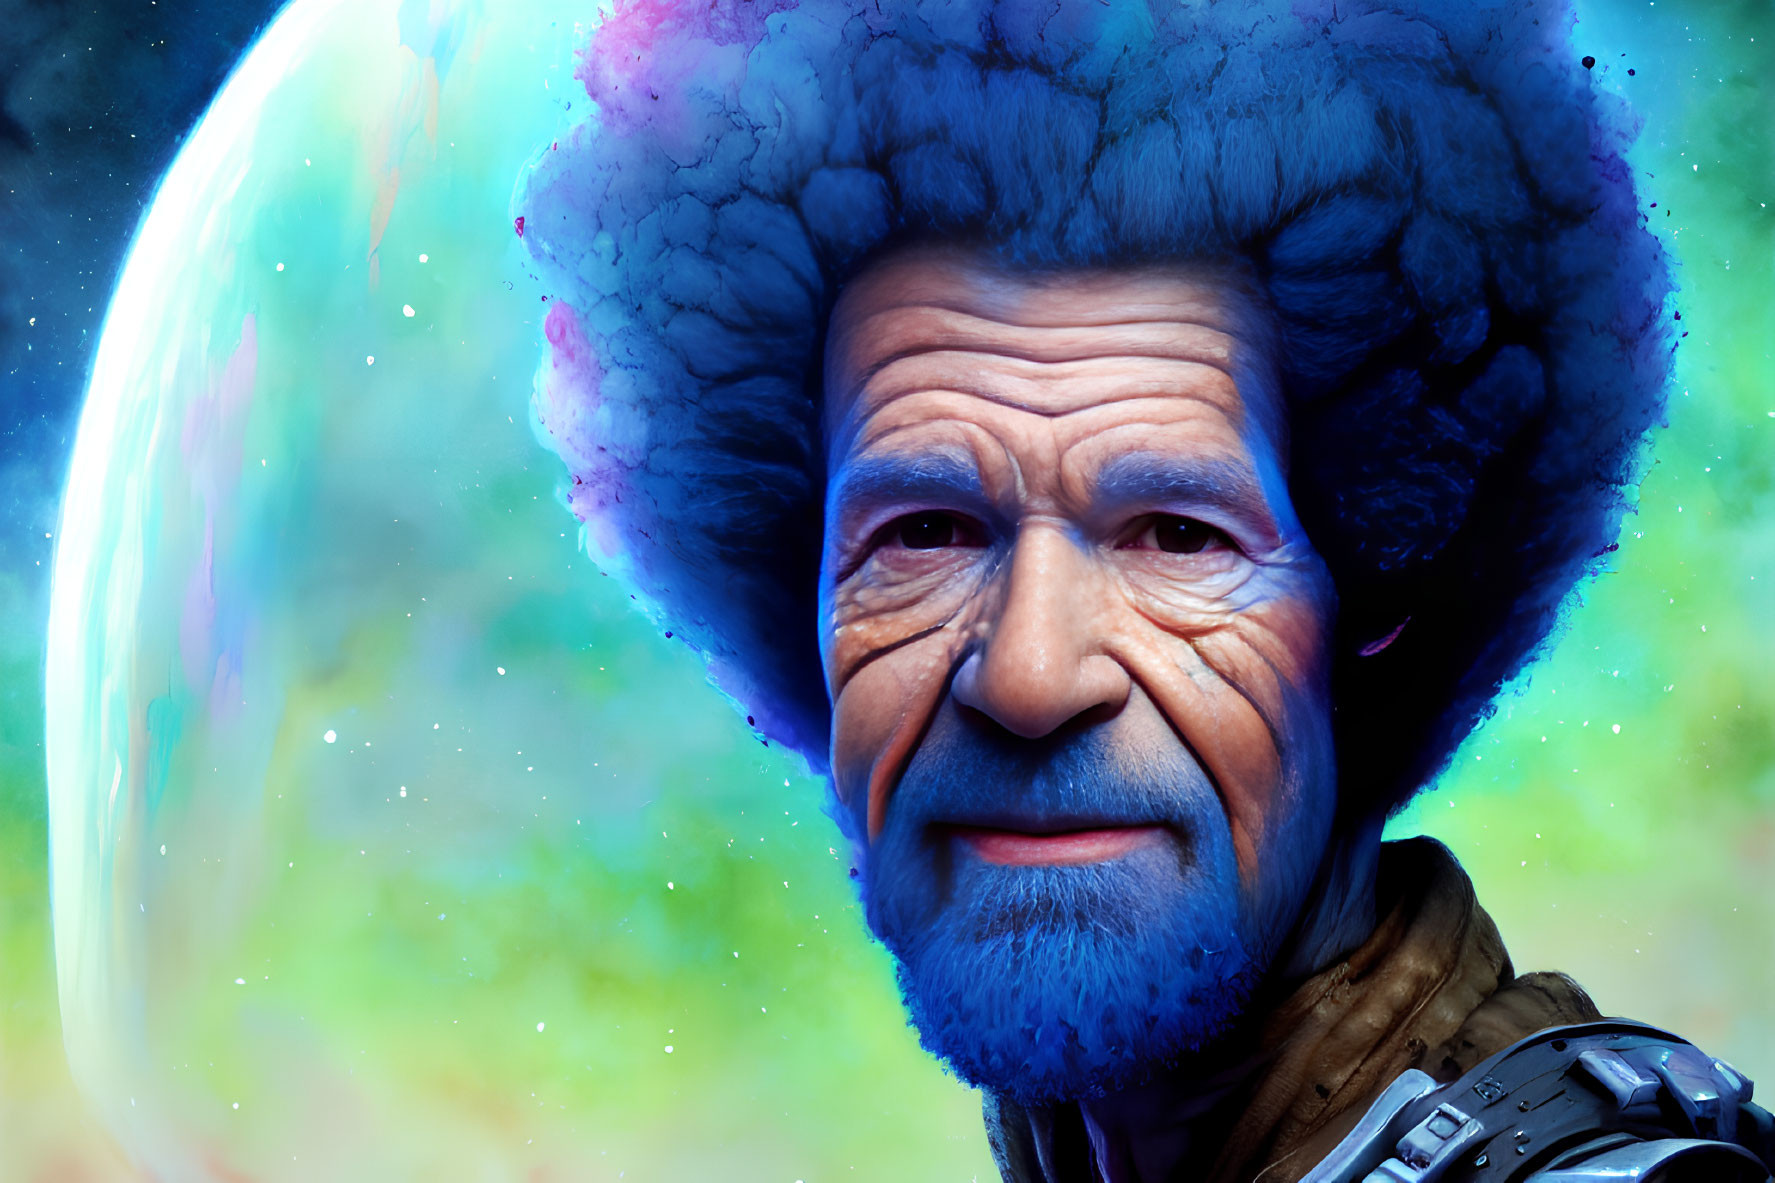 Elderly man digital art: cosmic hair, space suit, starry backdrop